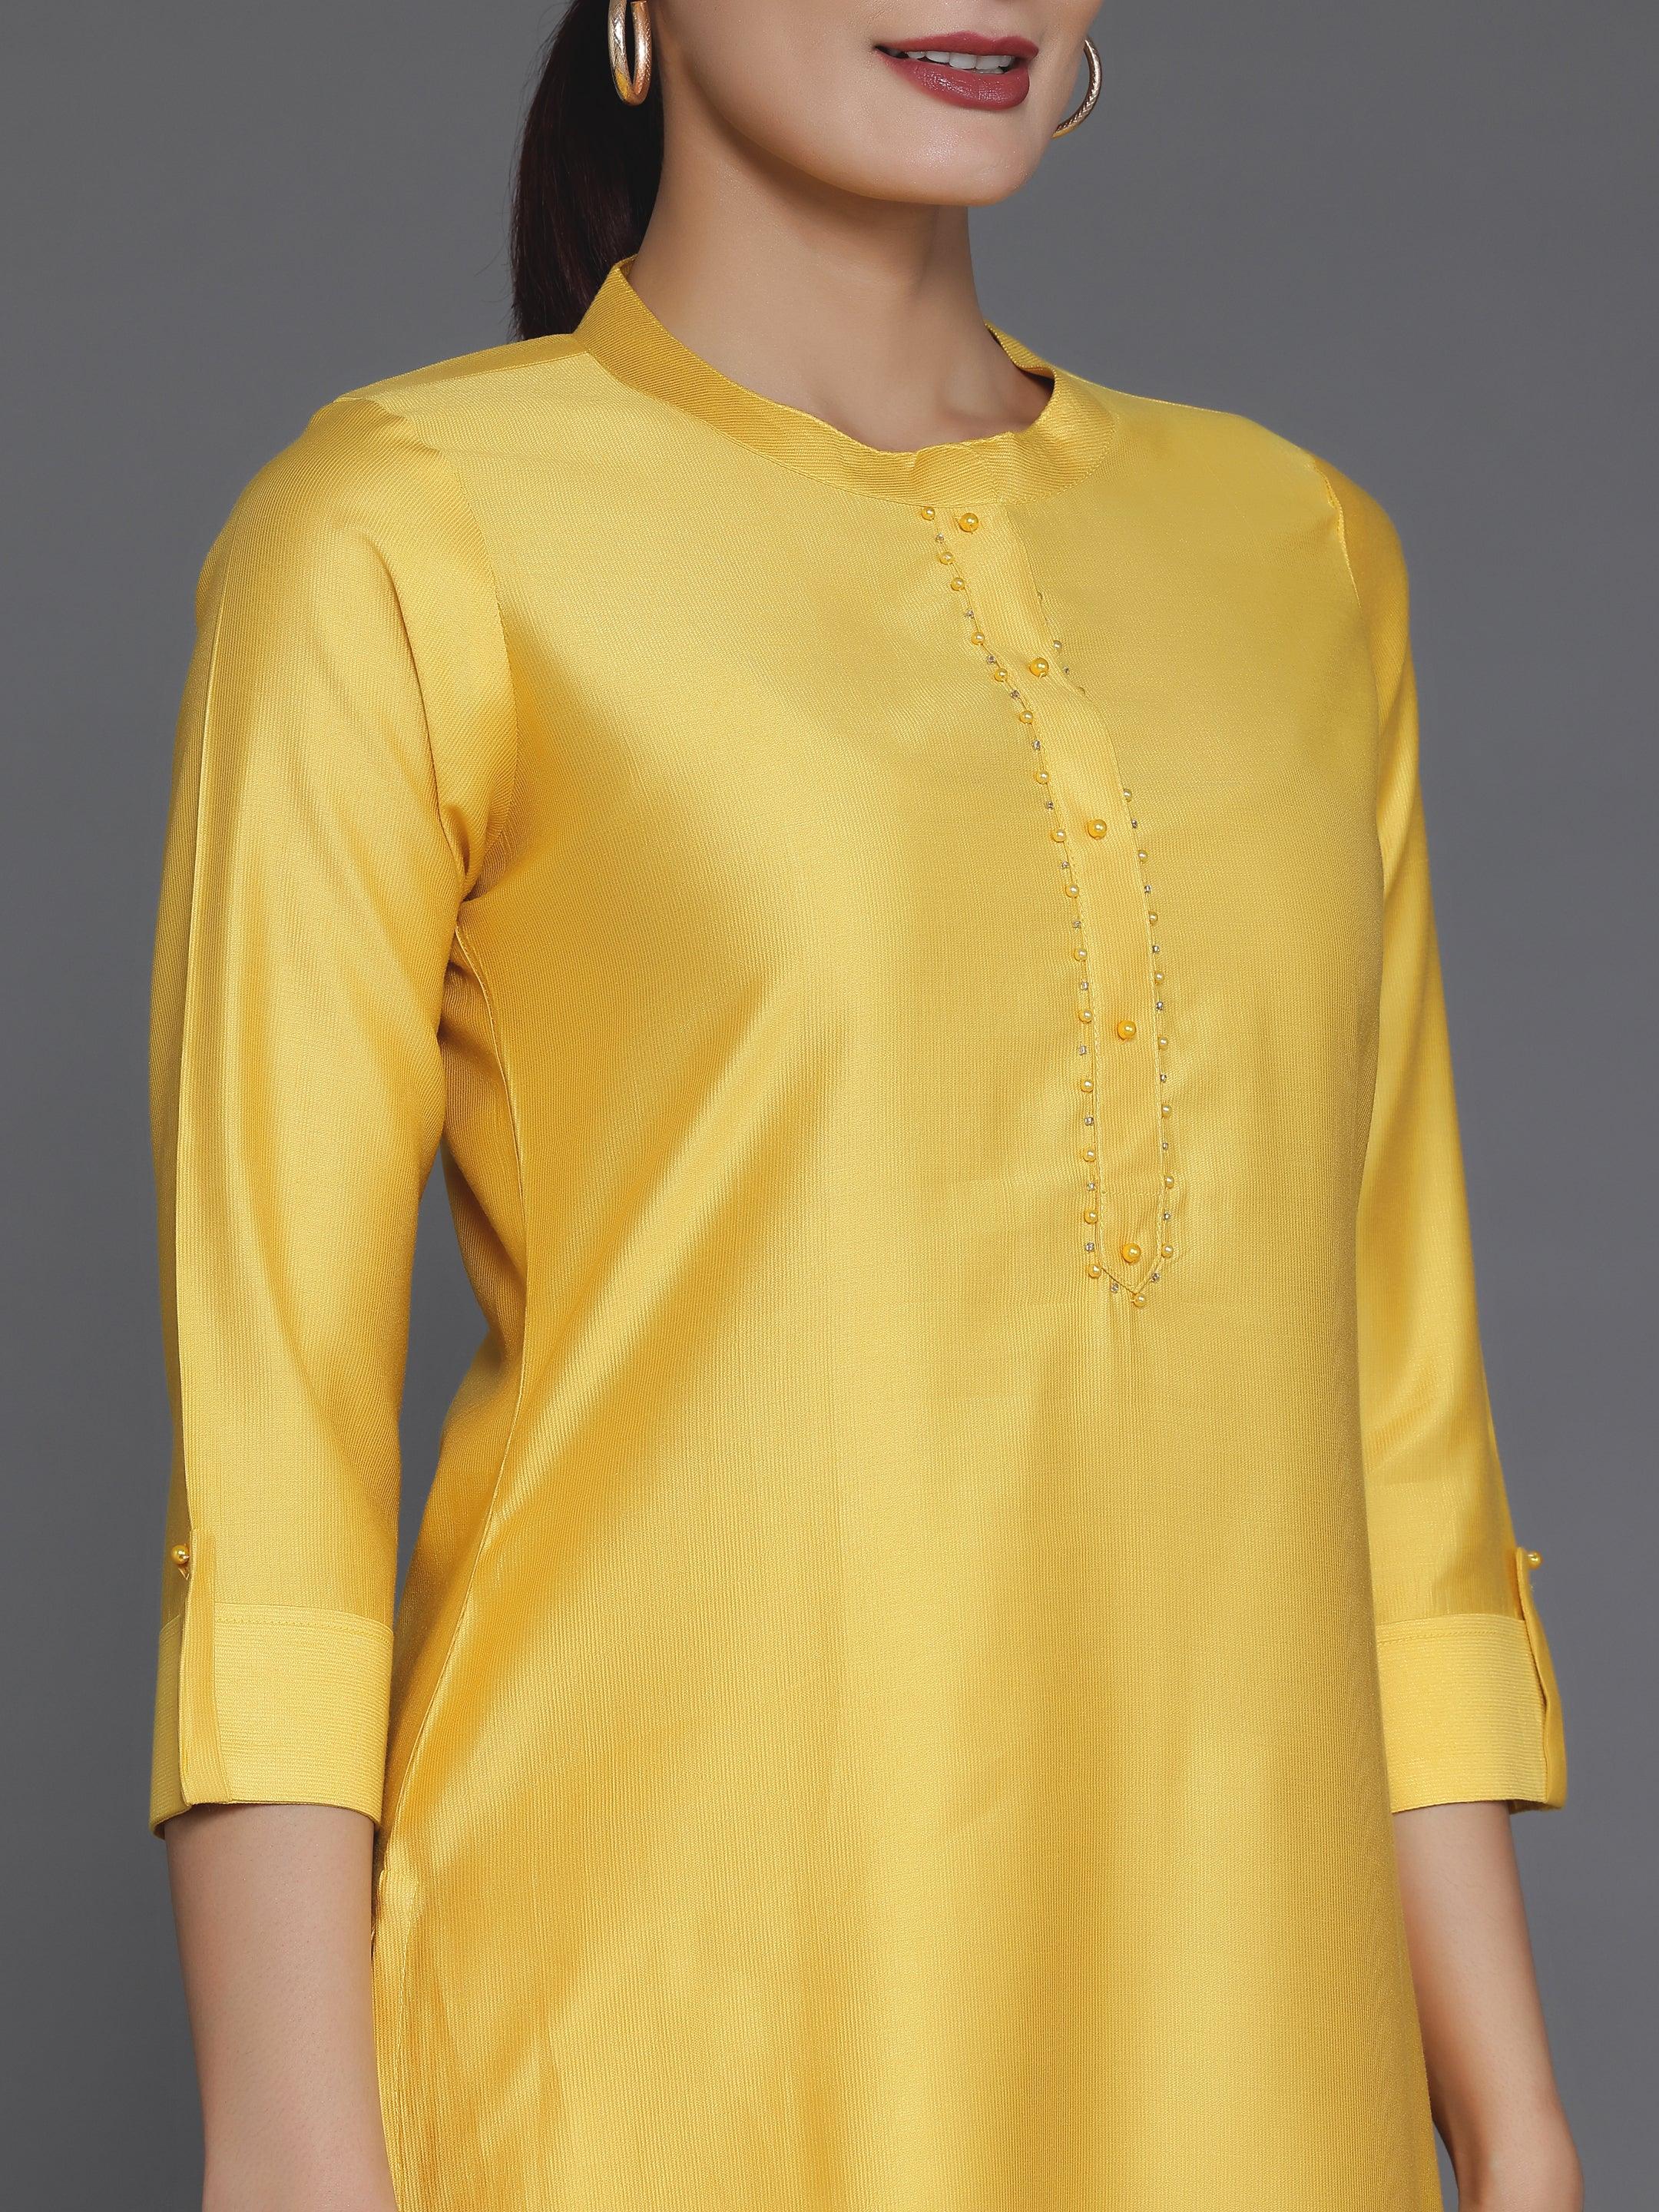 Mustard Self Design Silk Blend Straight Suit With Dupatta